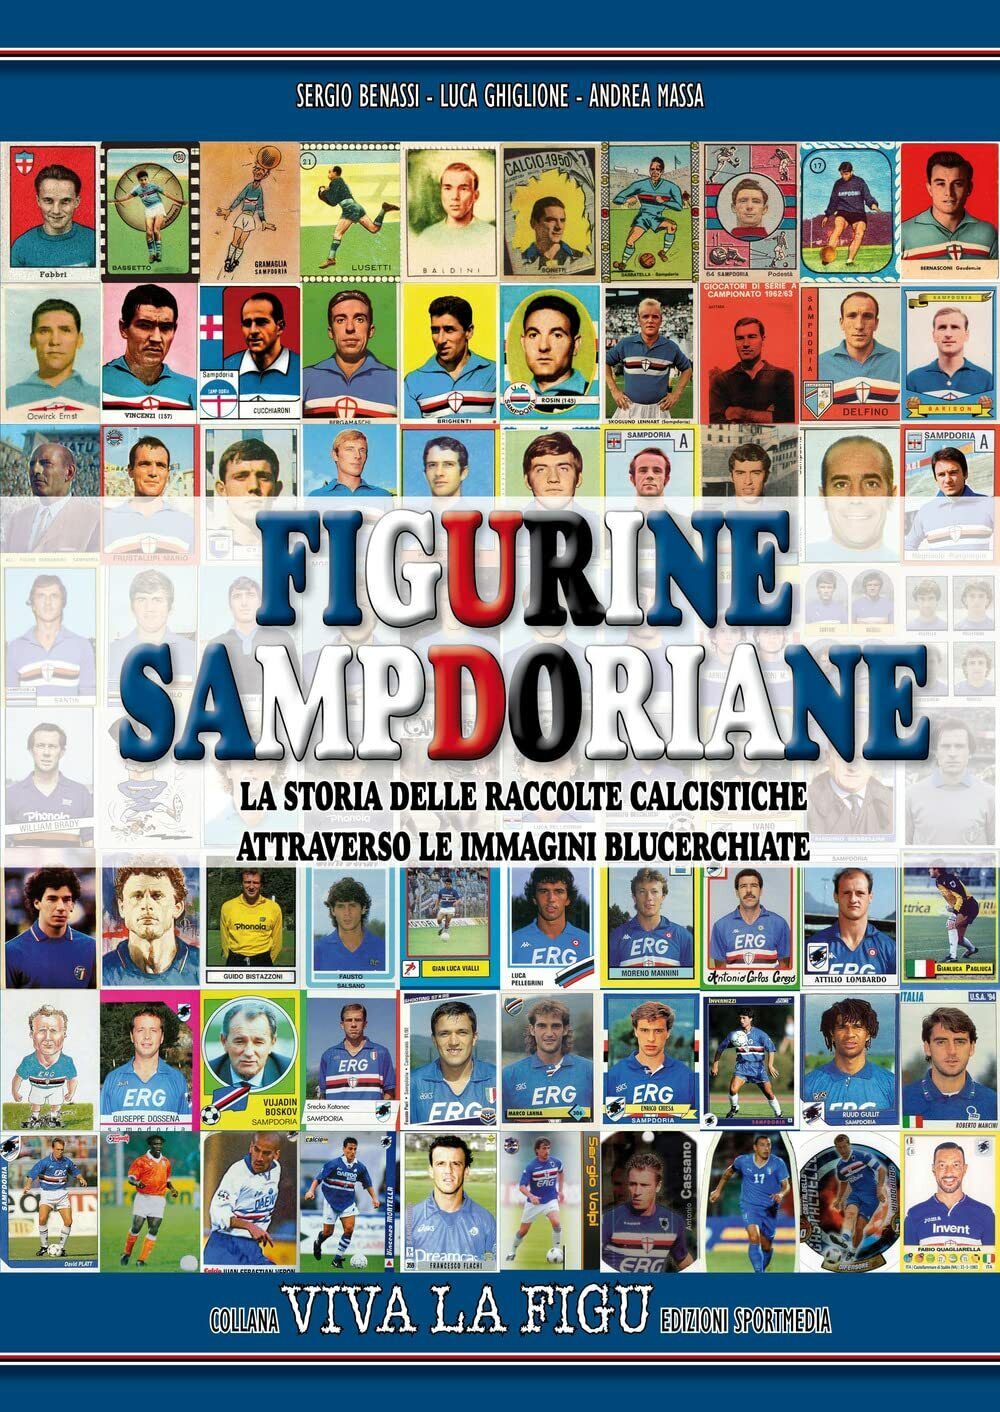 Figurine sampdoriane - Sergio Benassi, Luca Ghiglione, Andrea Massa - sportmedia